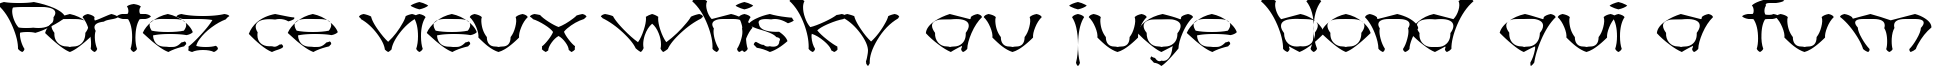 Пример написания шрифтом AwlScrawl текста на французском